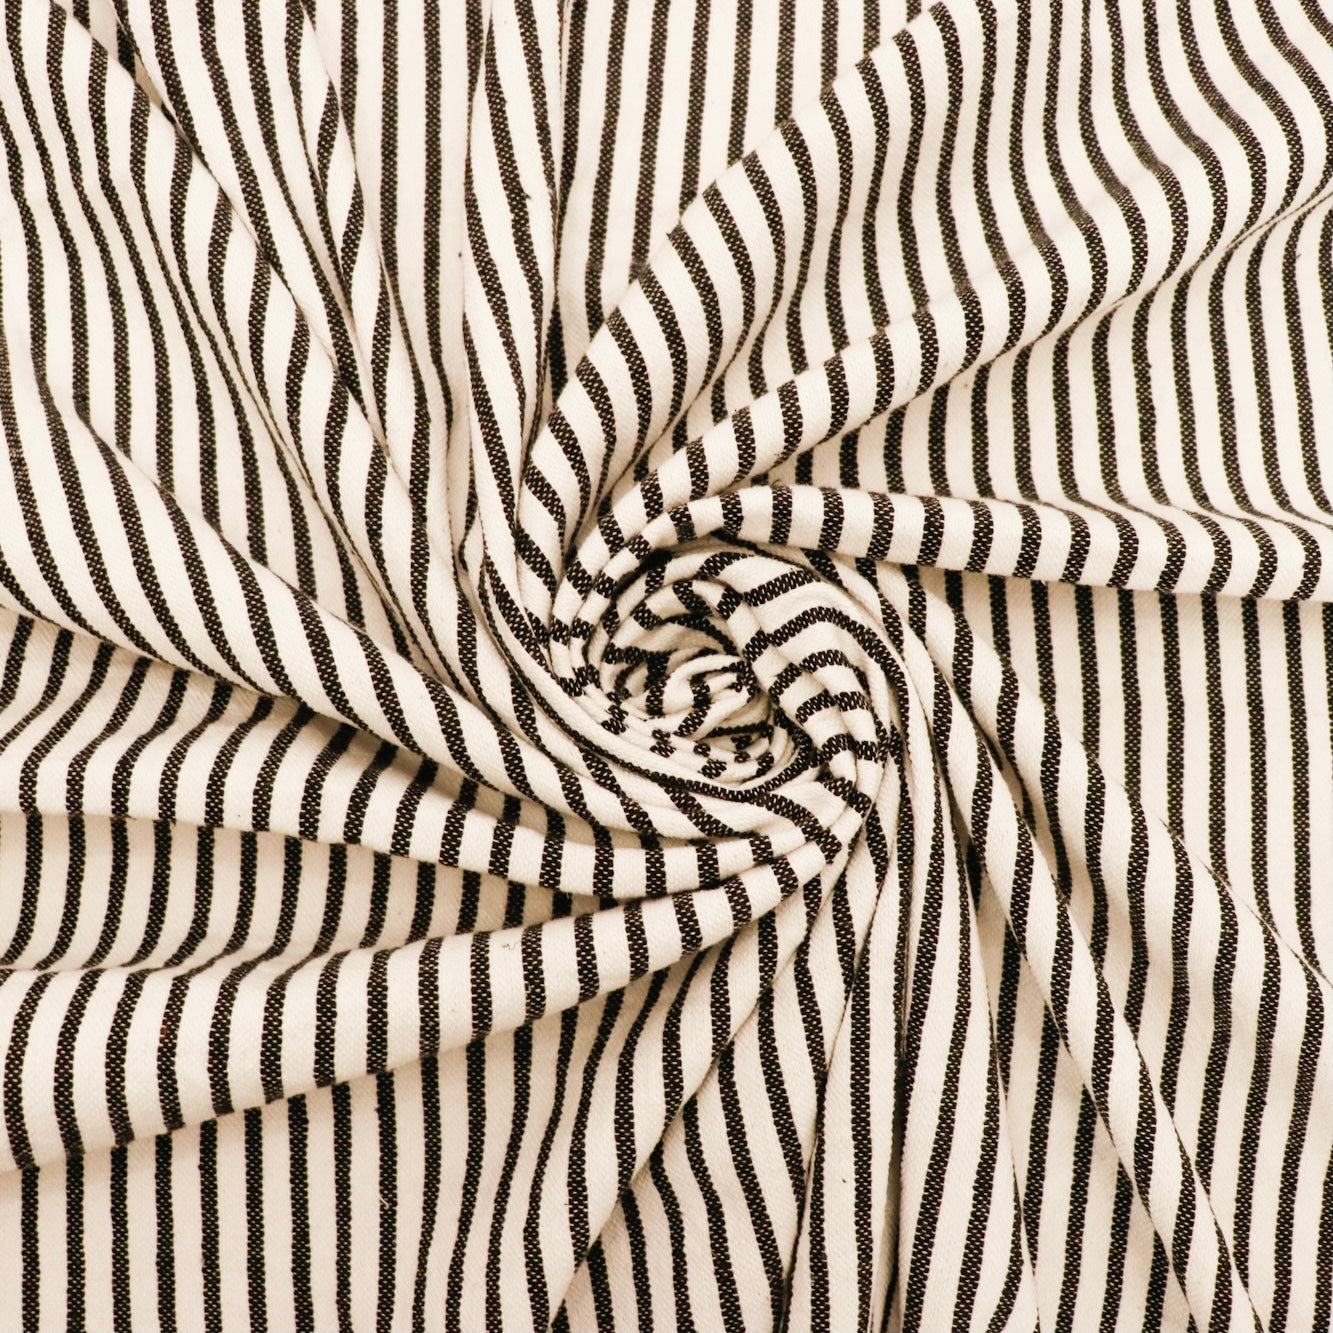 Black and Ivory Striped Tasseled Throw Blanket